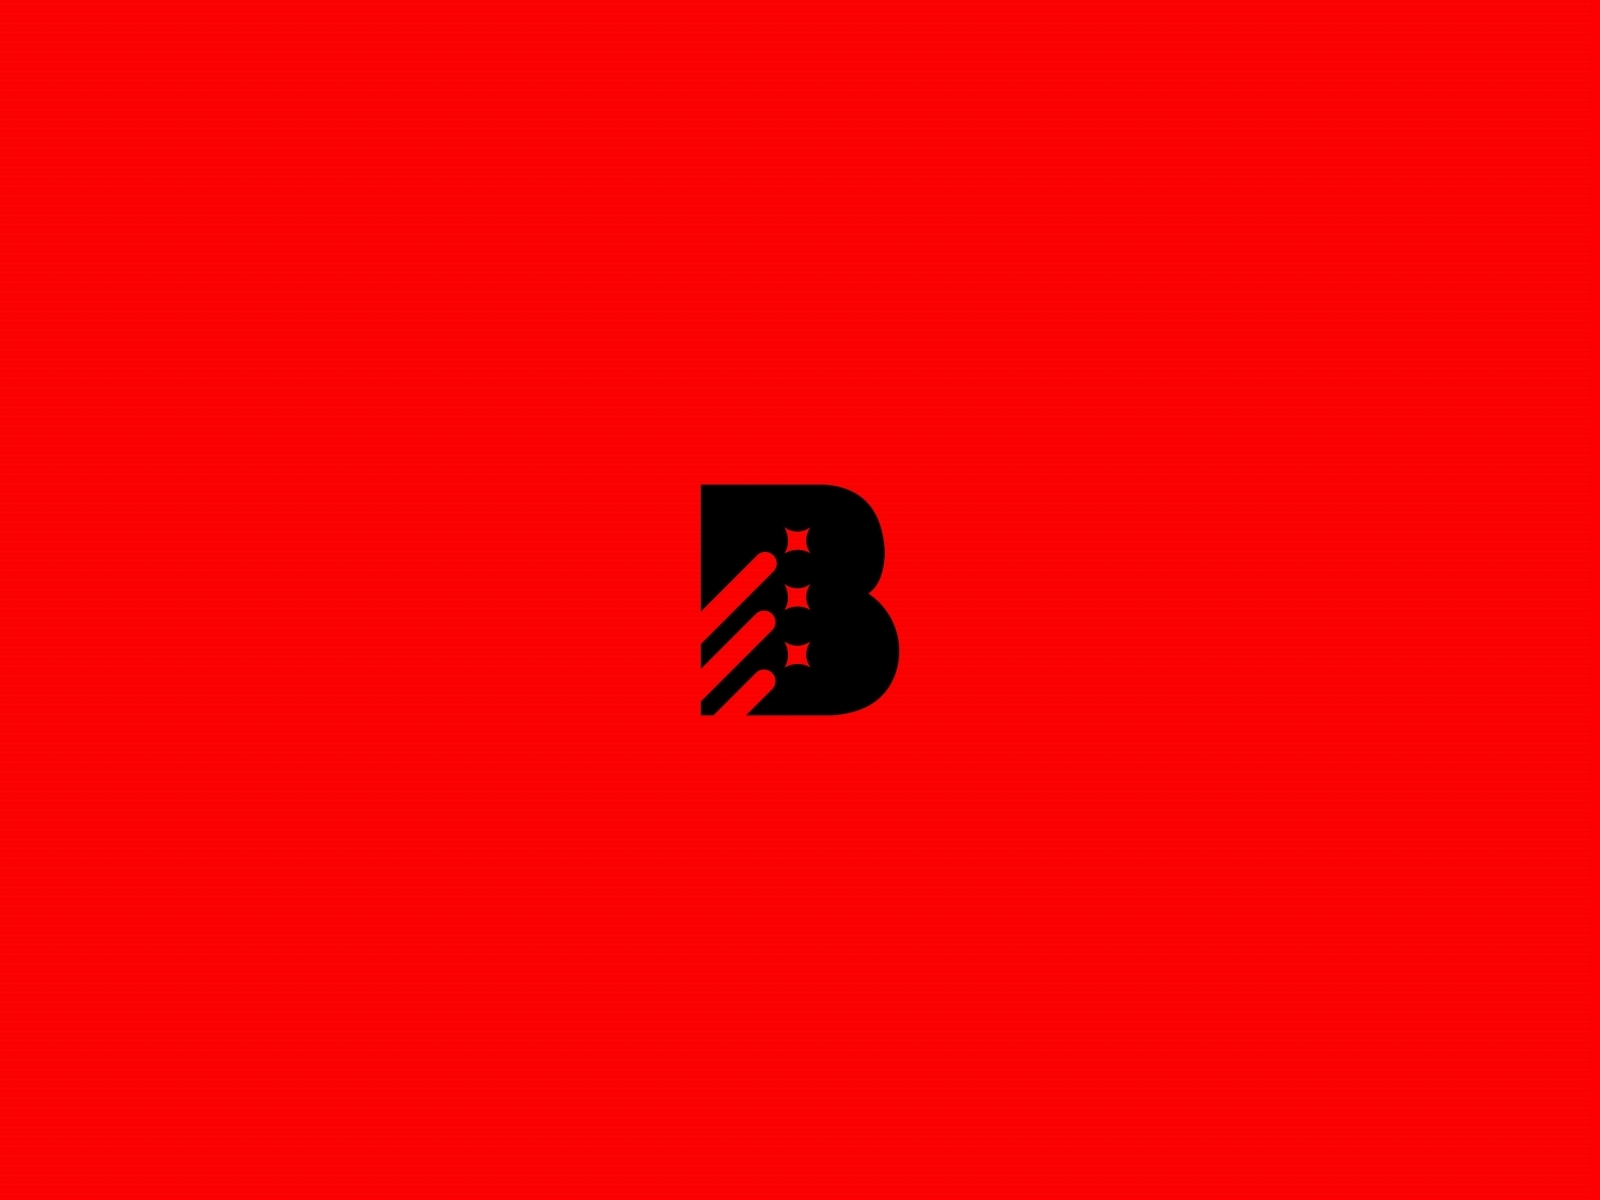 B latter logo icon by Kajolography on Dribbble